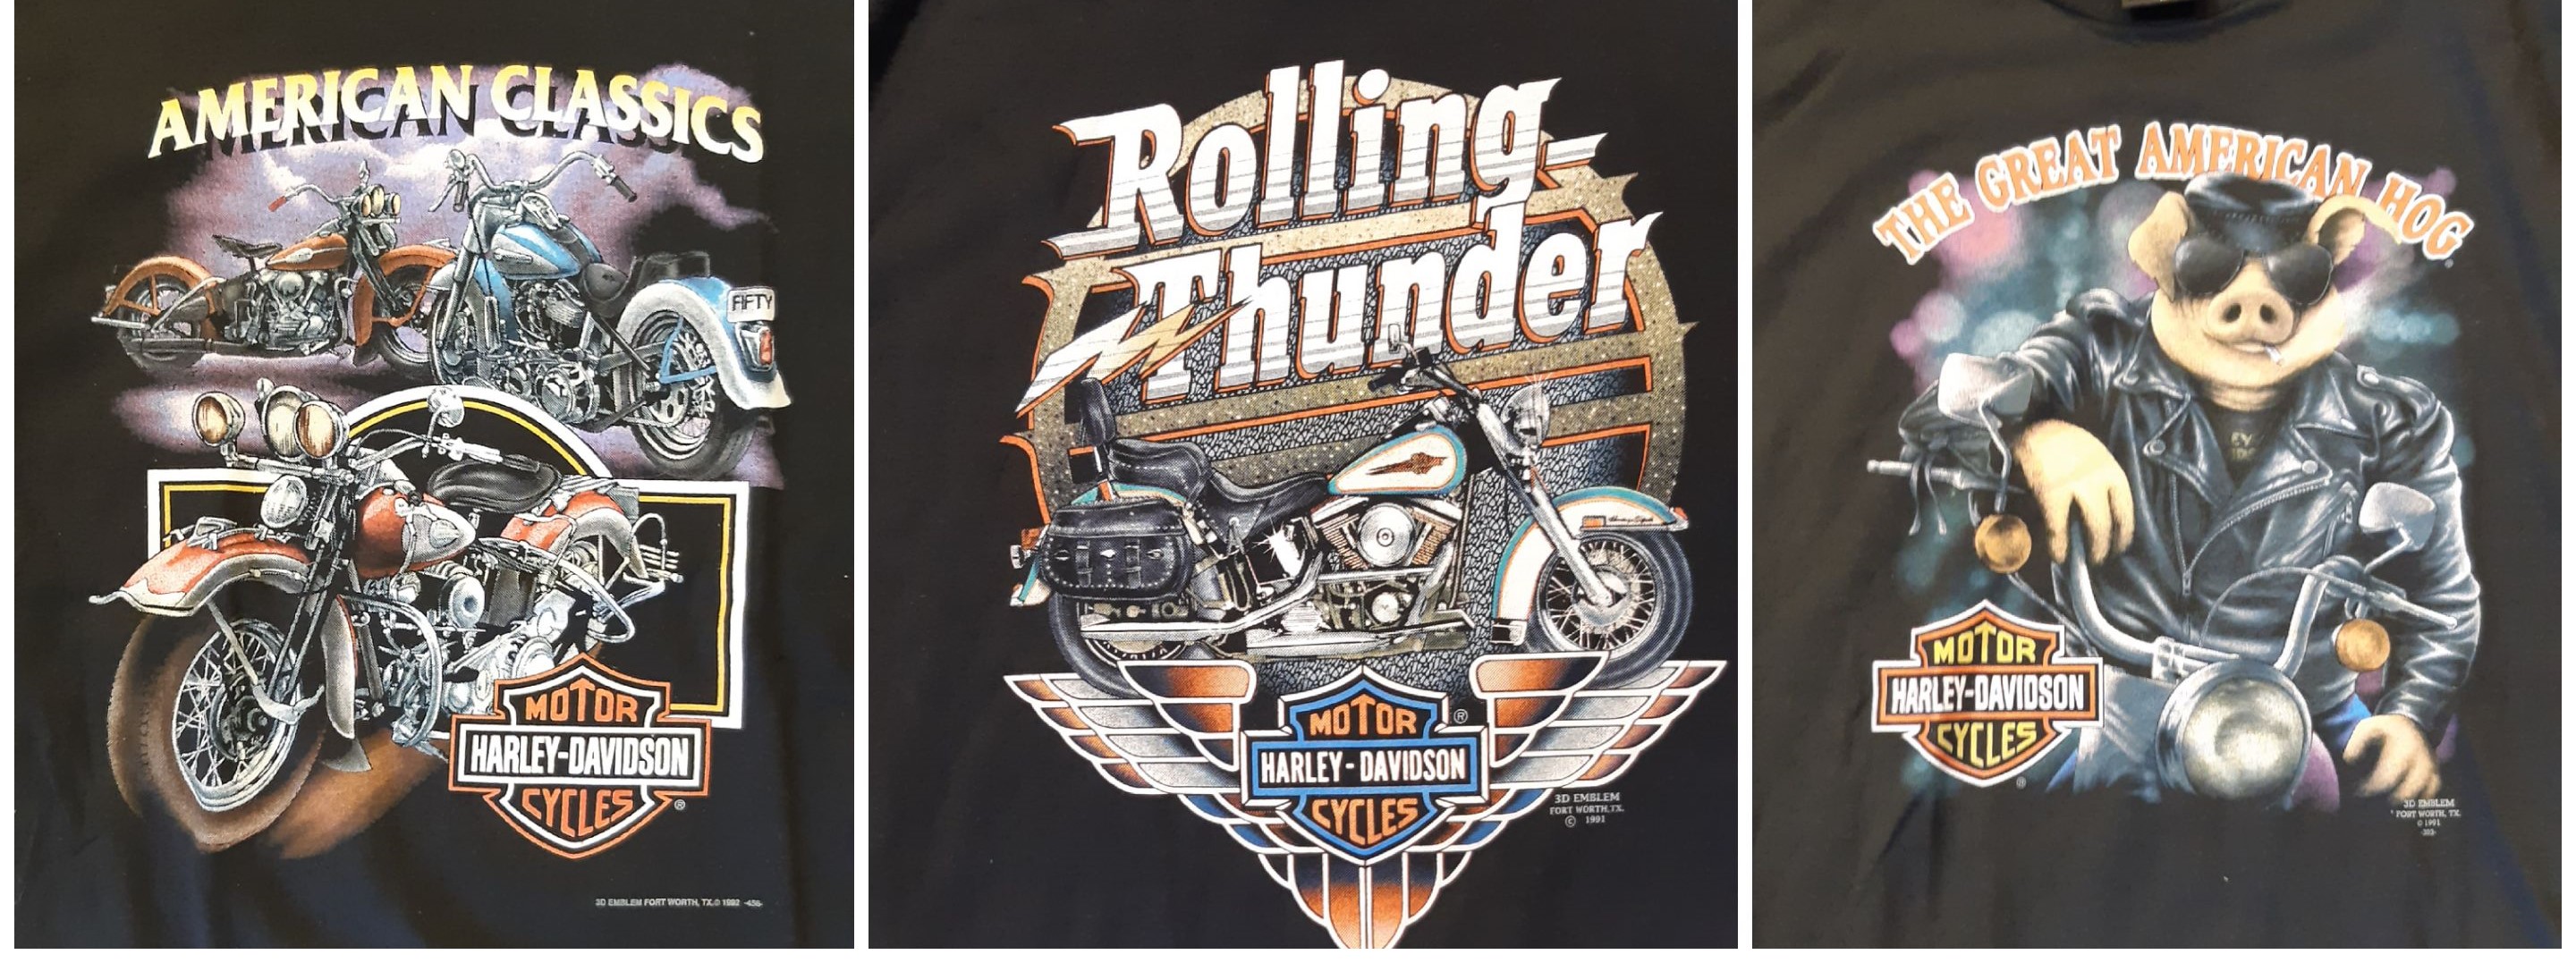 Harley Davidson Shirts